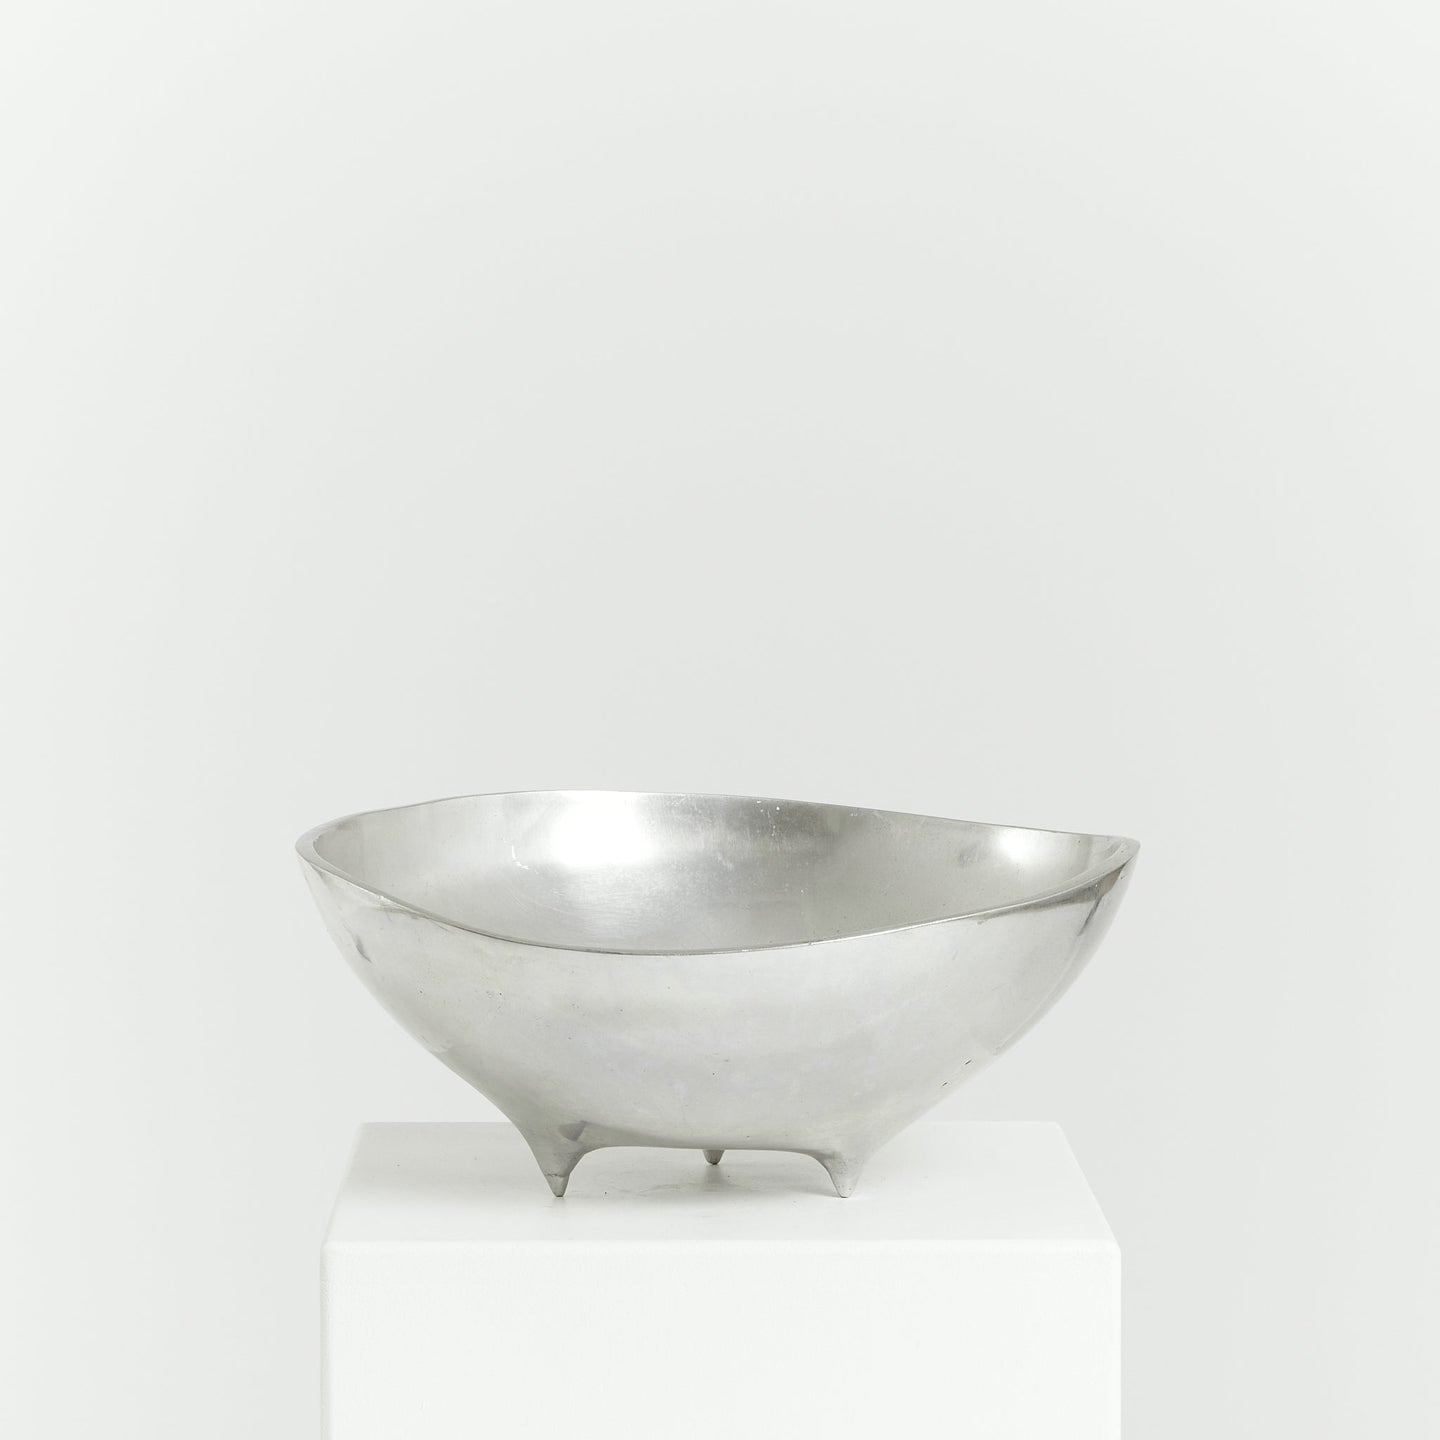 Large freeform aluminium bowl by Bruce Fox